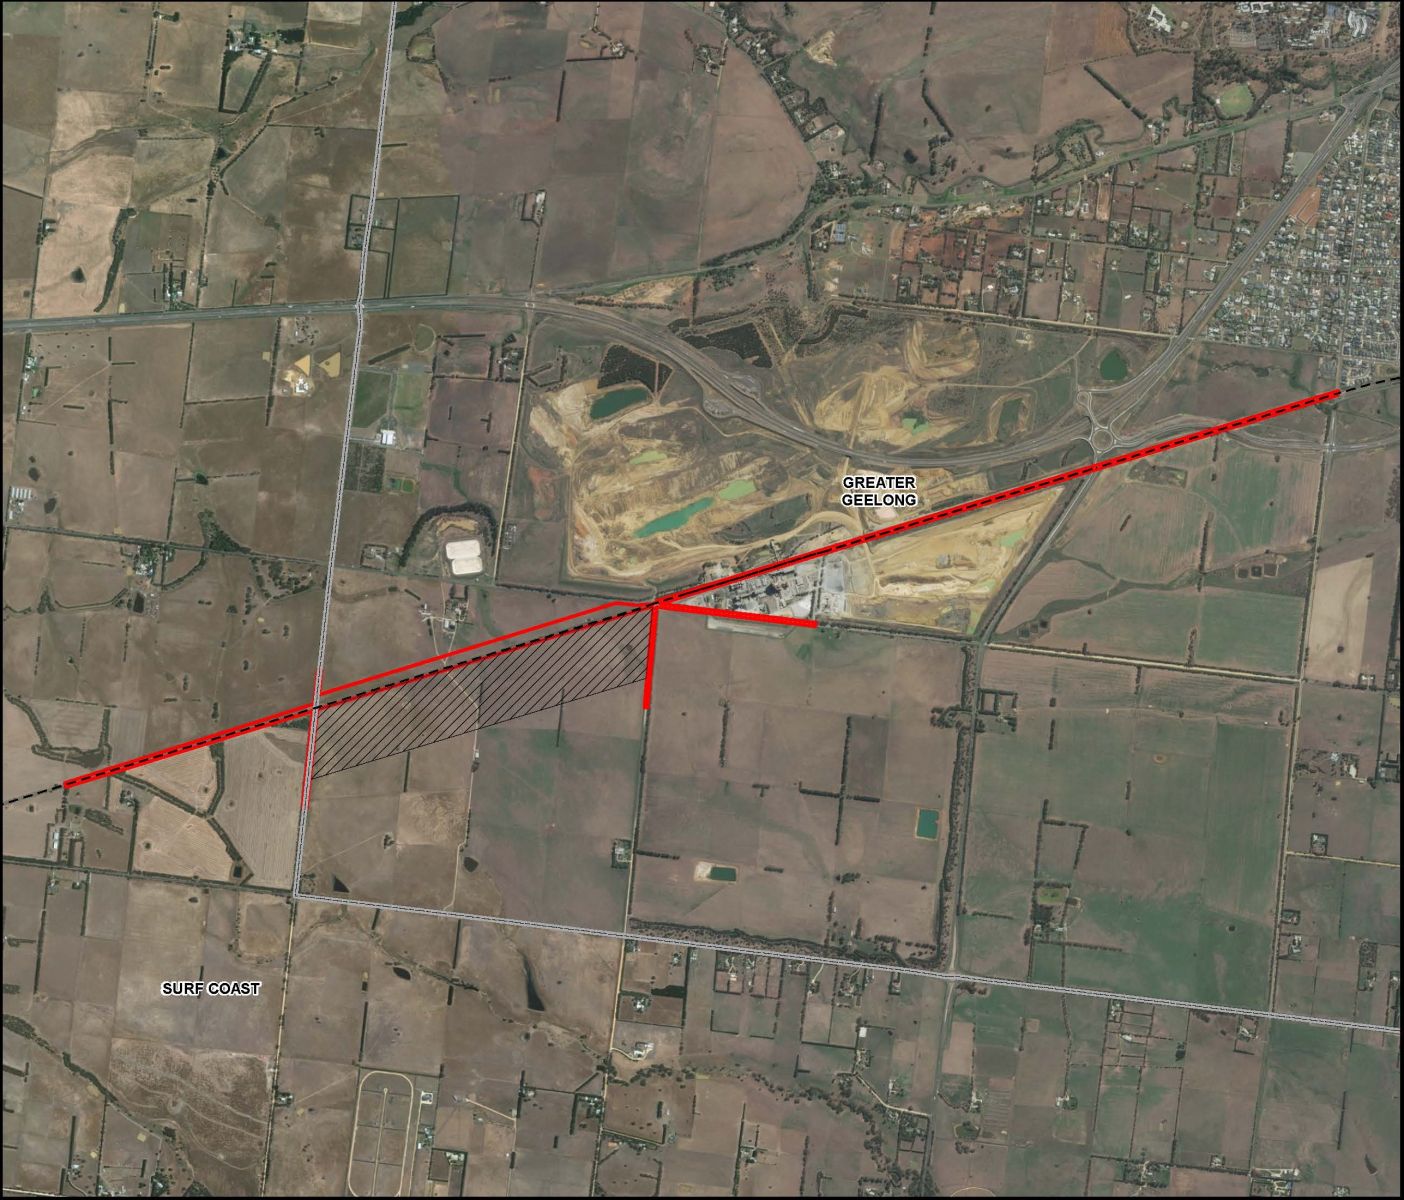 Site location of proposed GC104